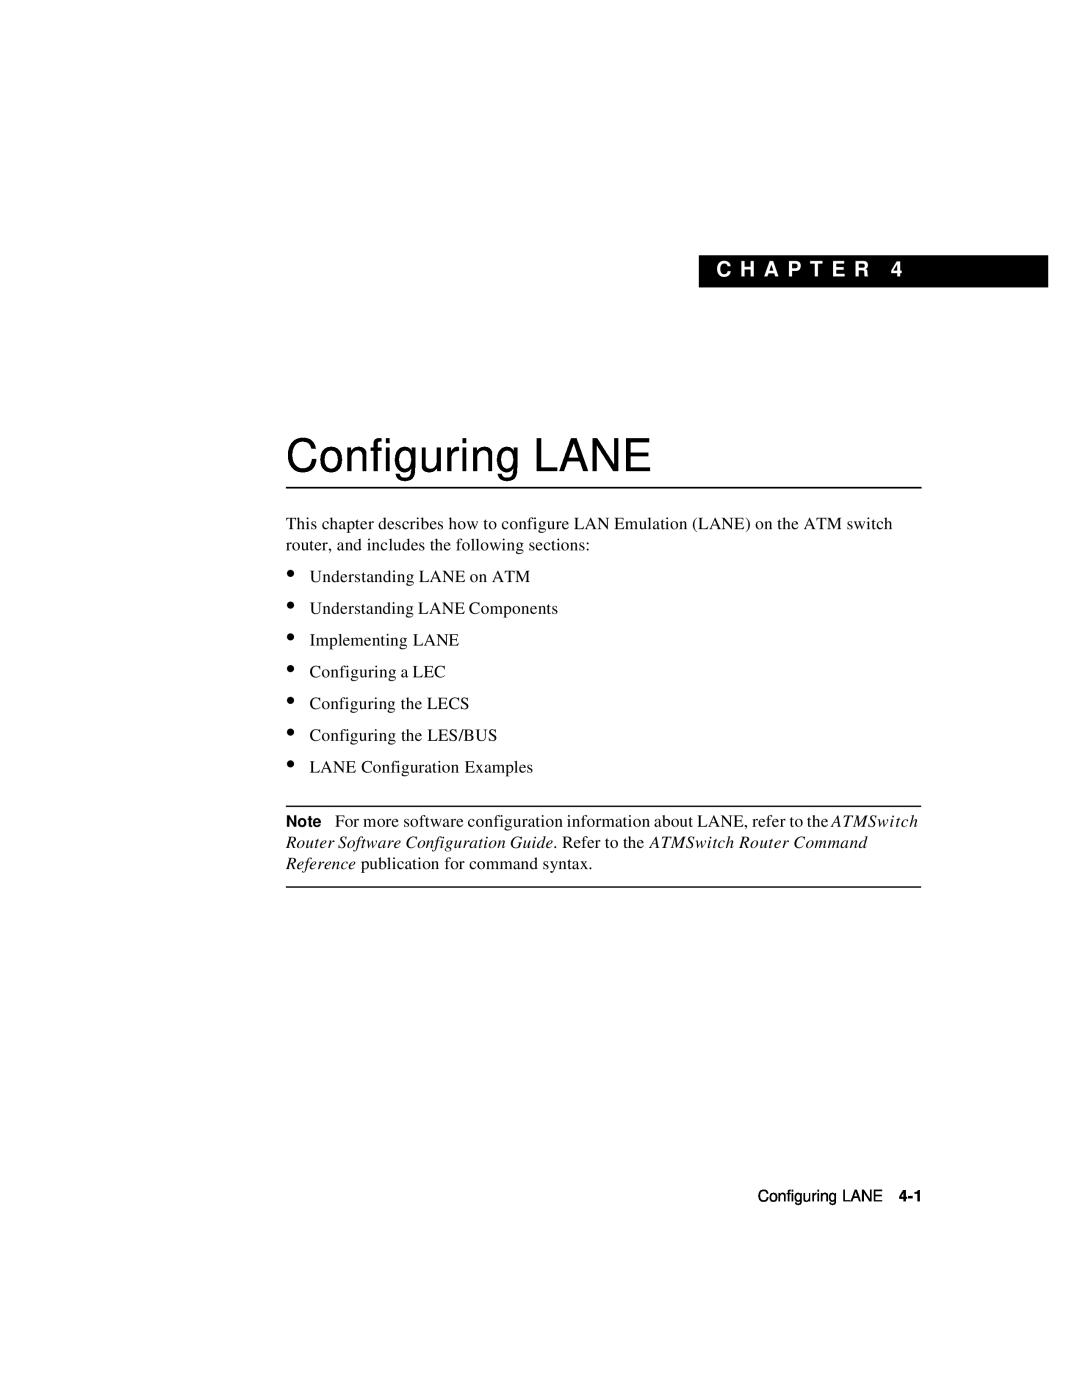 Cisco Systems 78-6897-01 manual Configuring LANE, C H A P T E R 